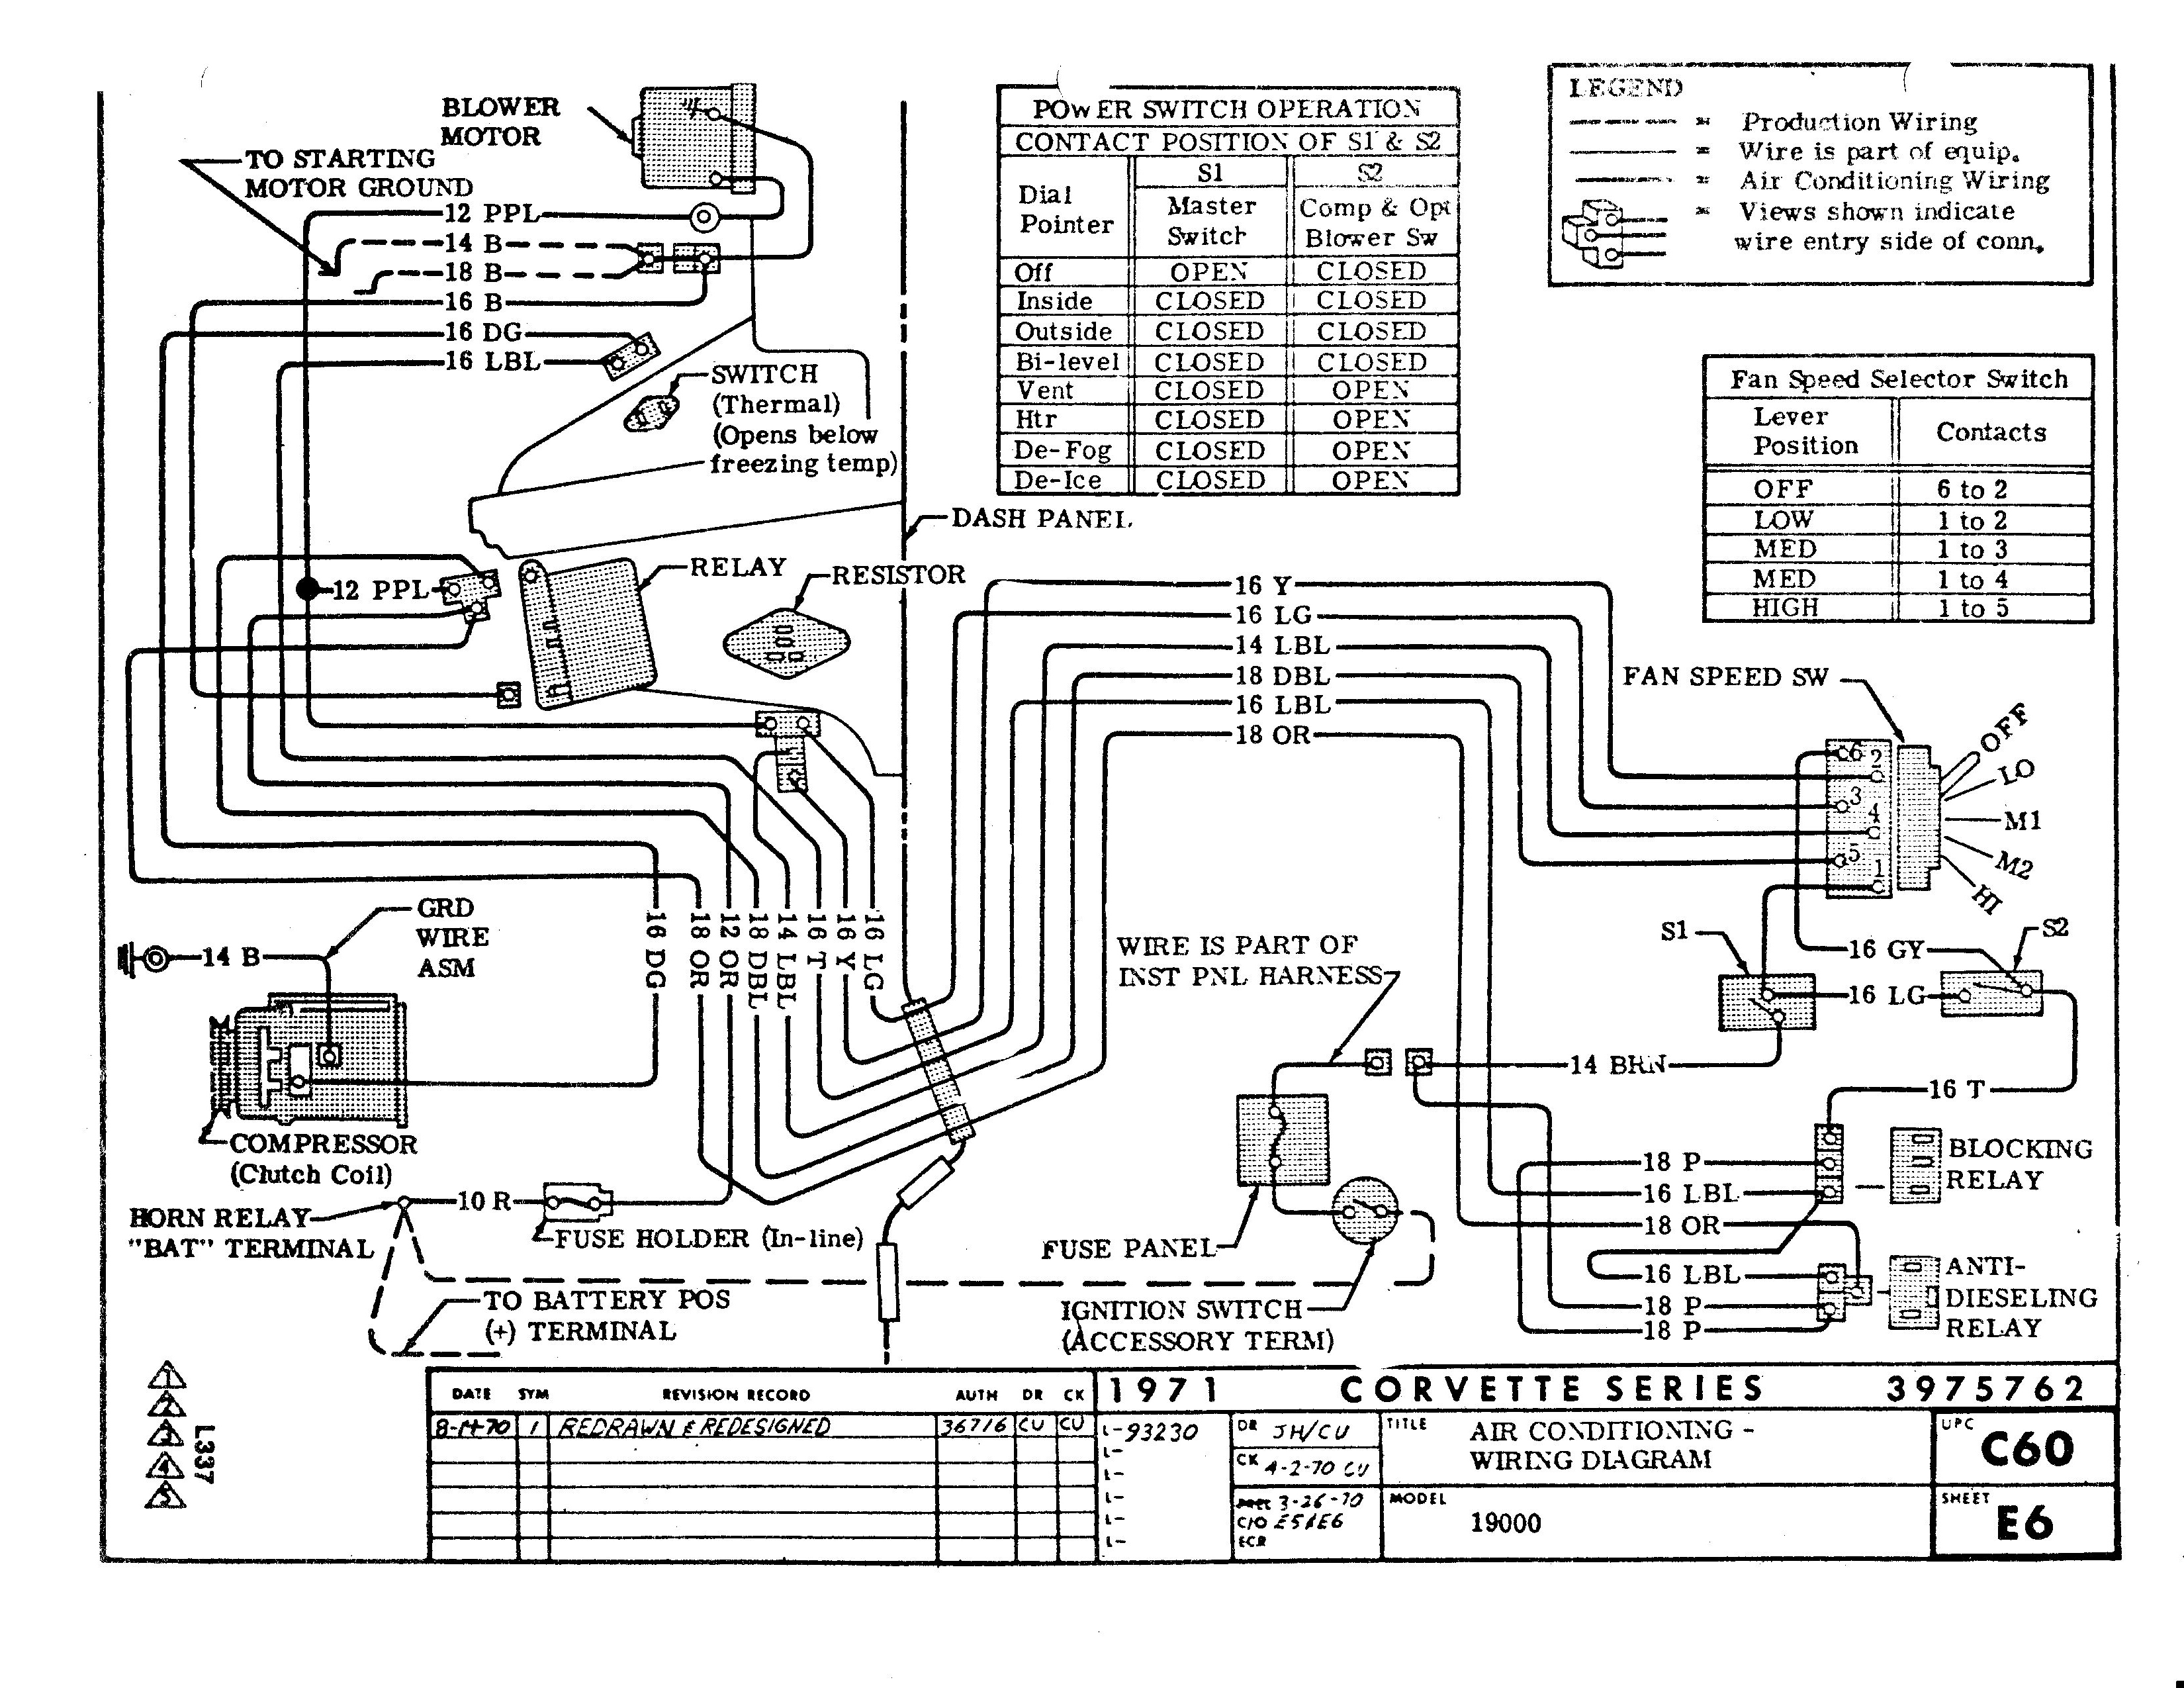 Wiring Diagram Info: 33 1972 Corvette Wiring Diagram